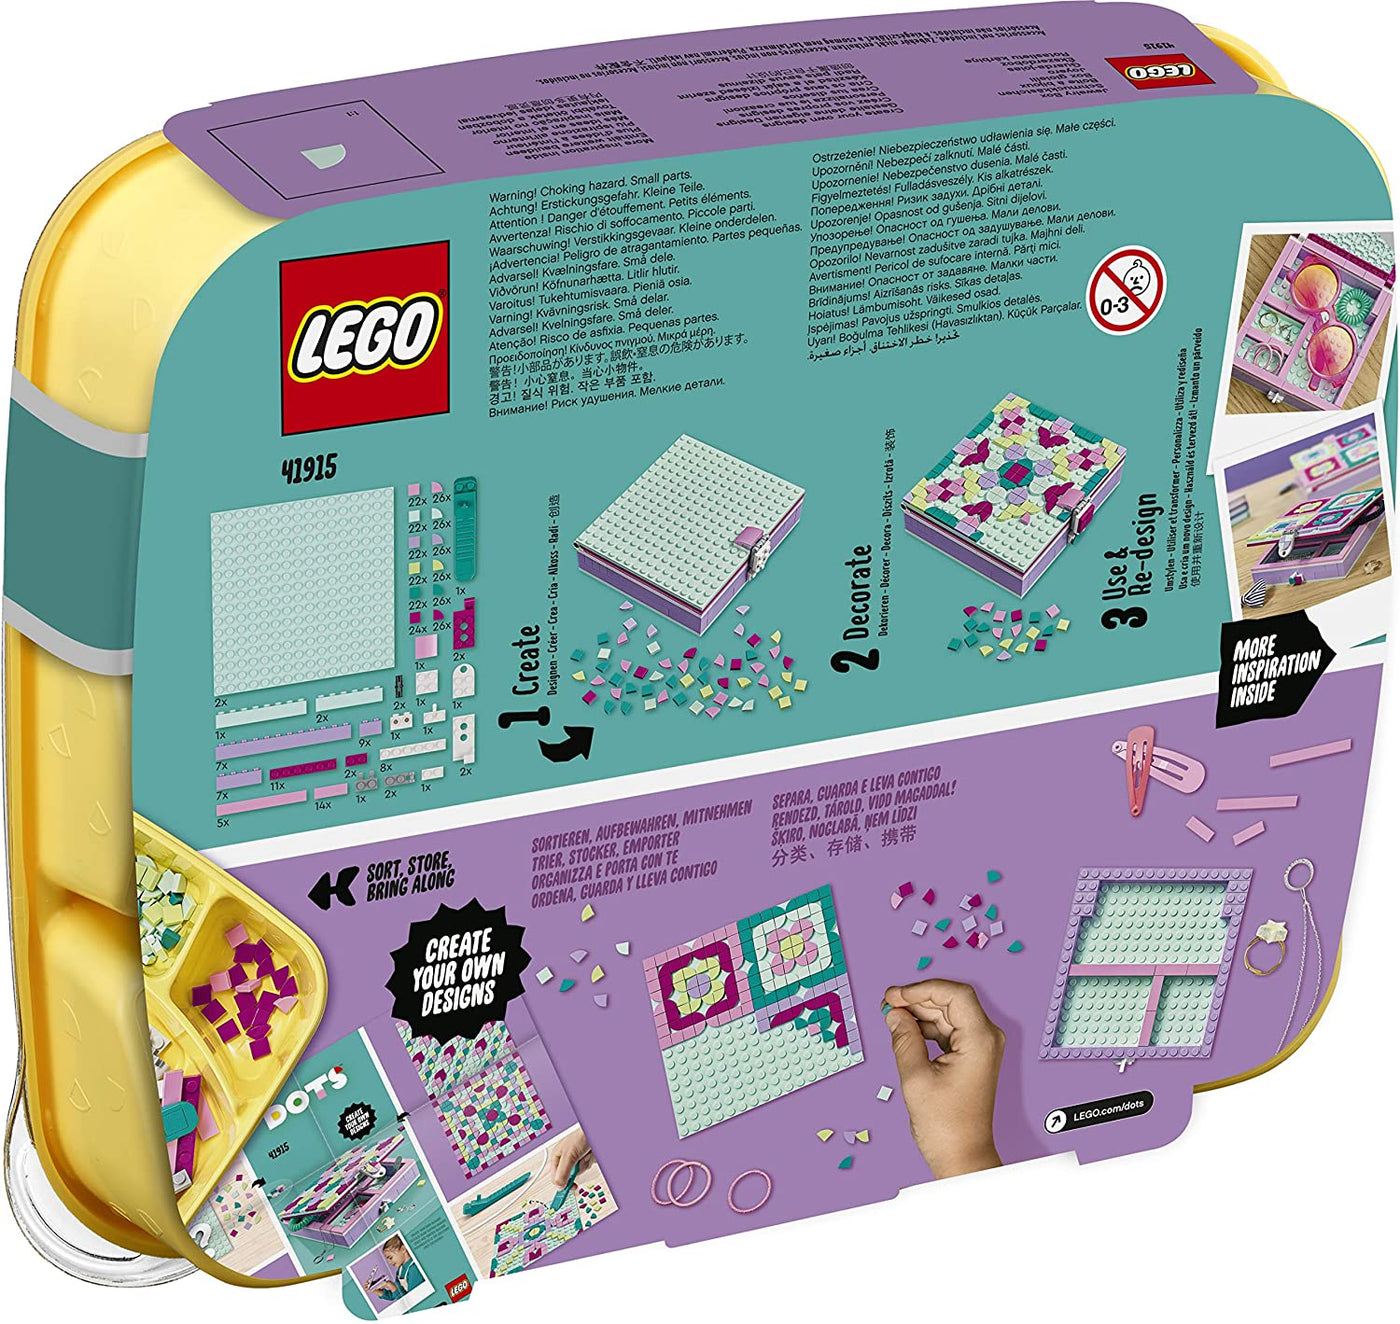 LEGO DOTS Jewelry Box, 41915